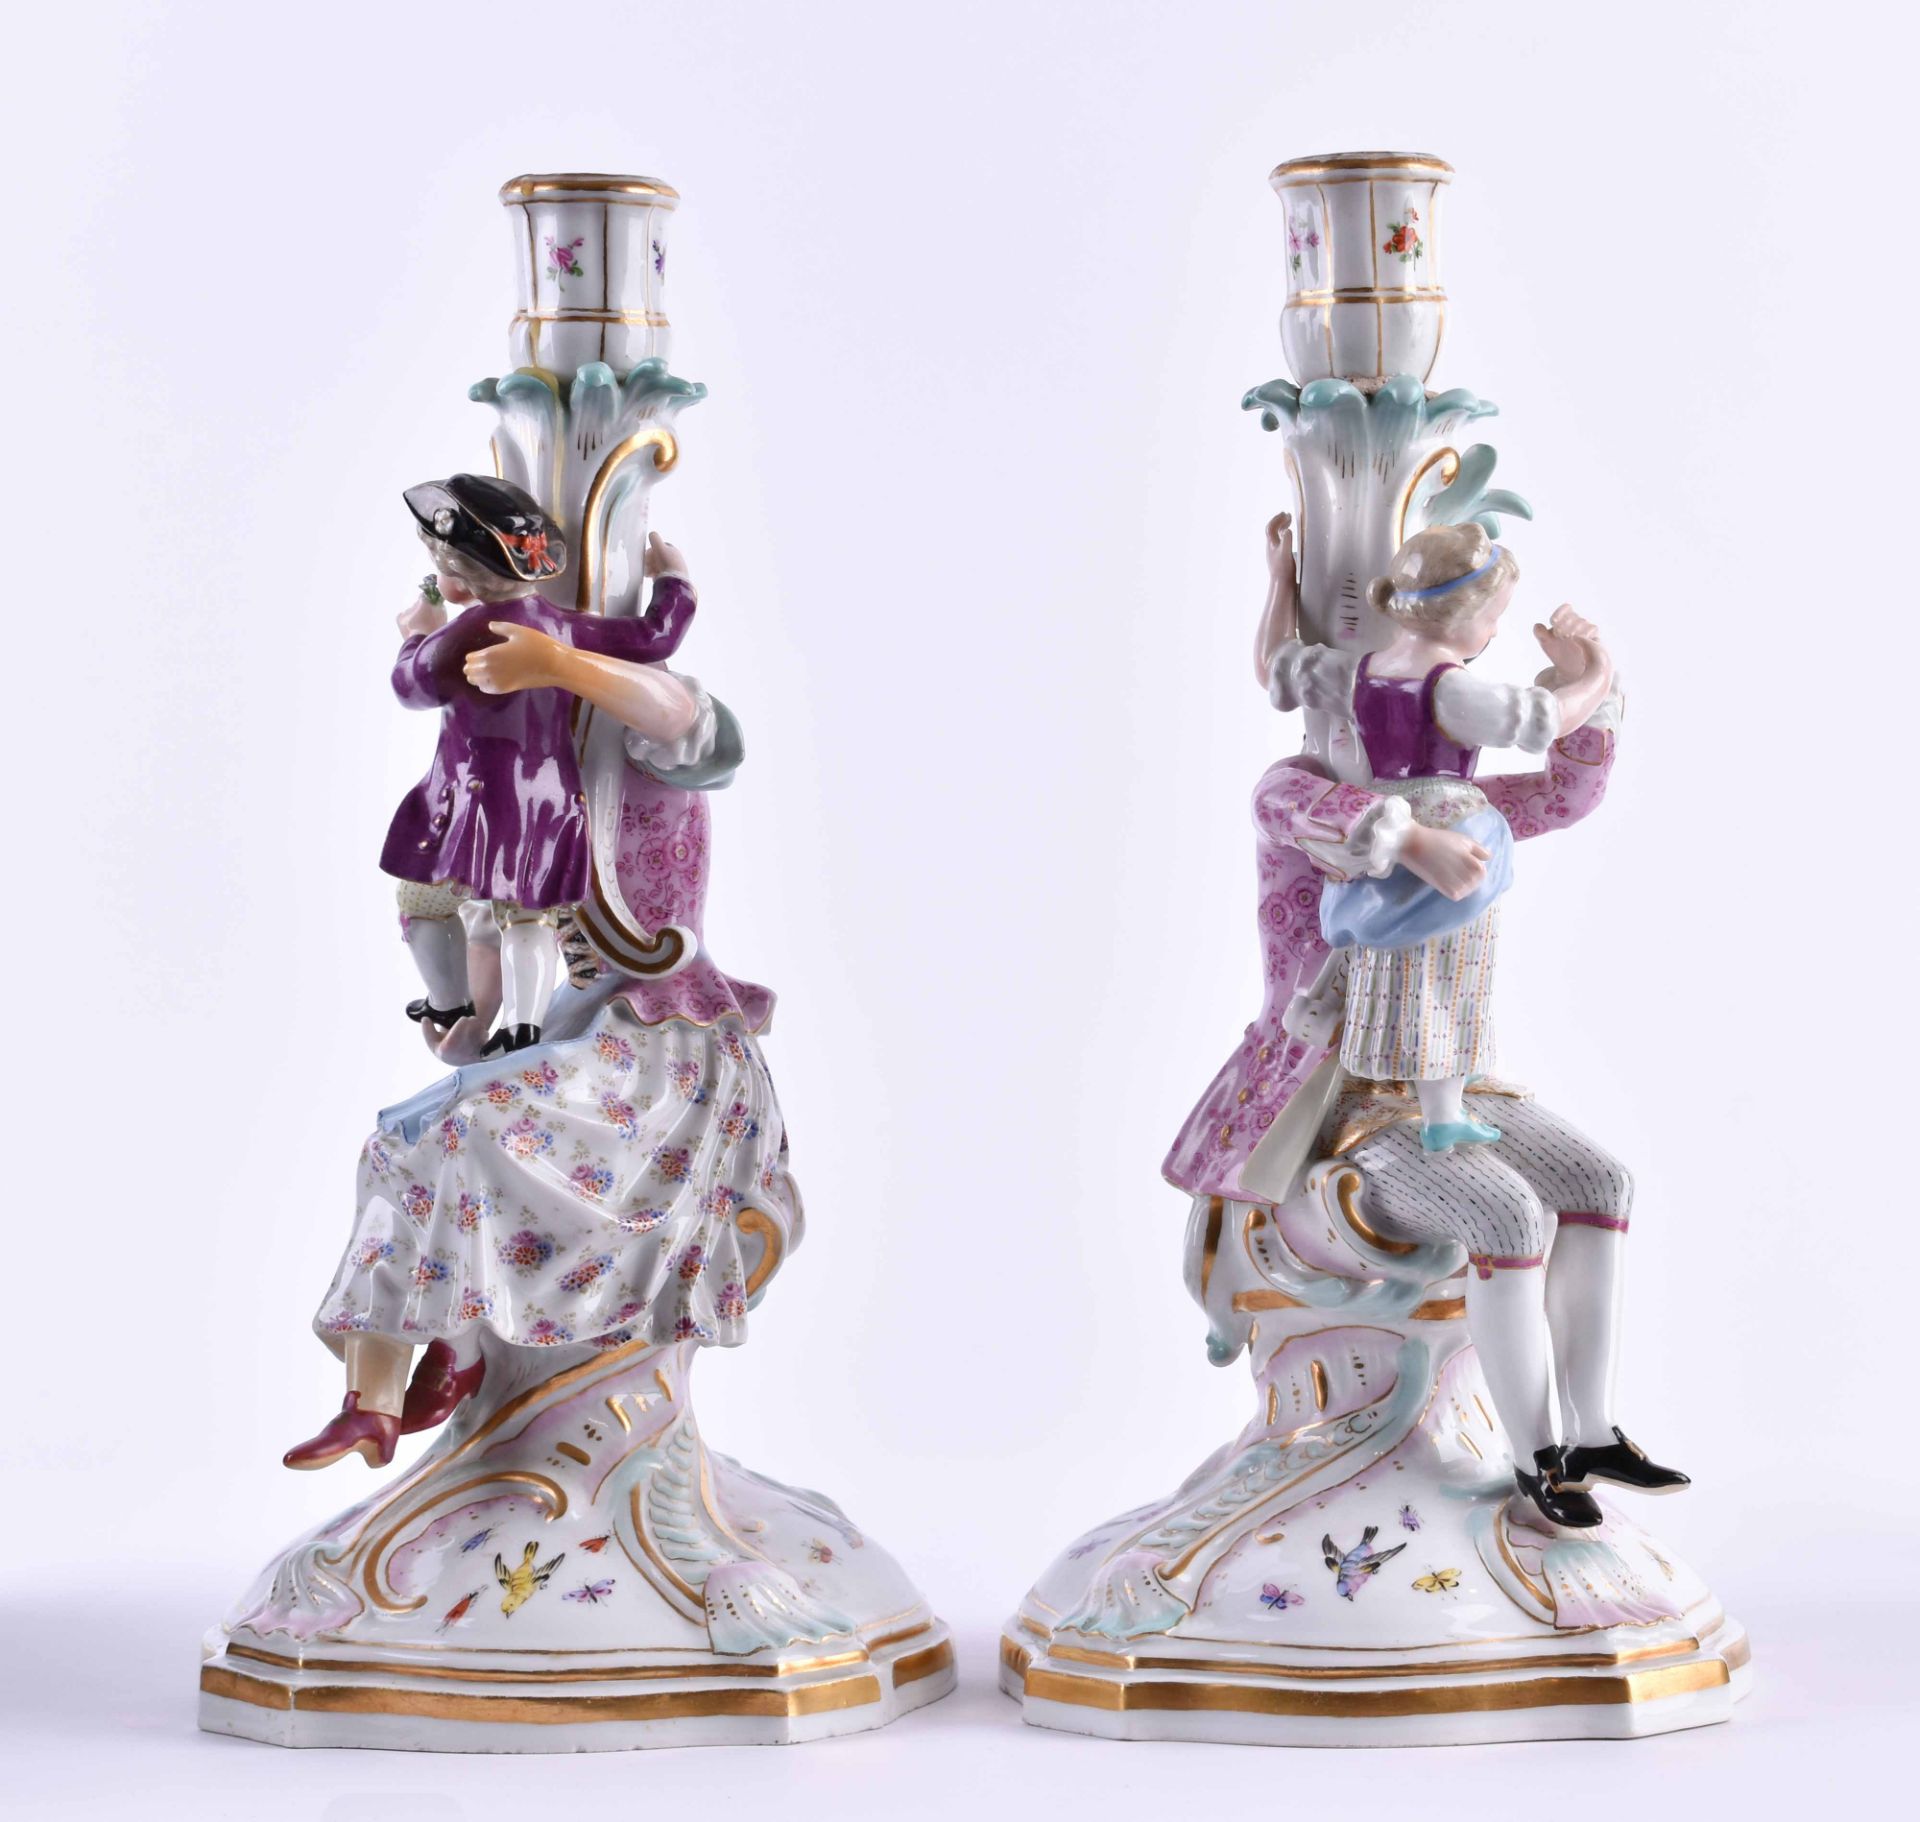  Pair of candlesticks Meissen 19th century - Image 3 of 8